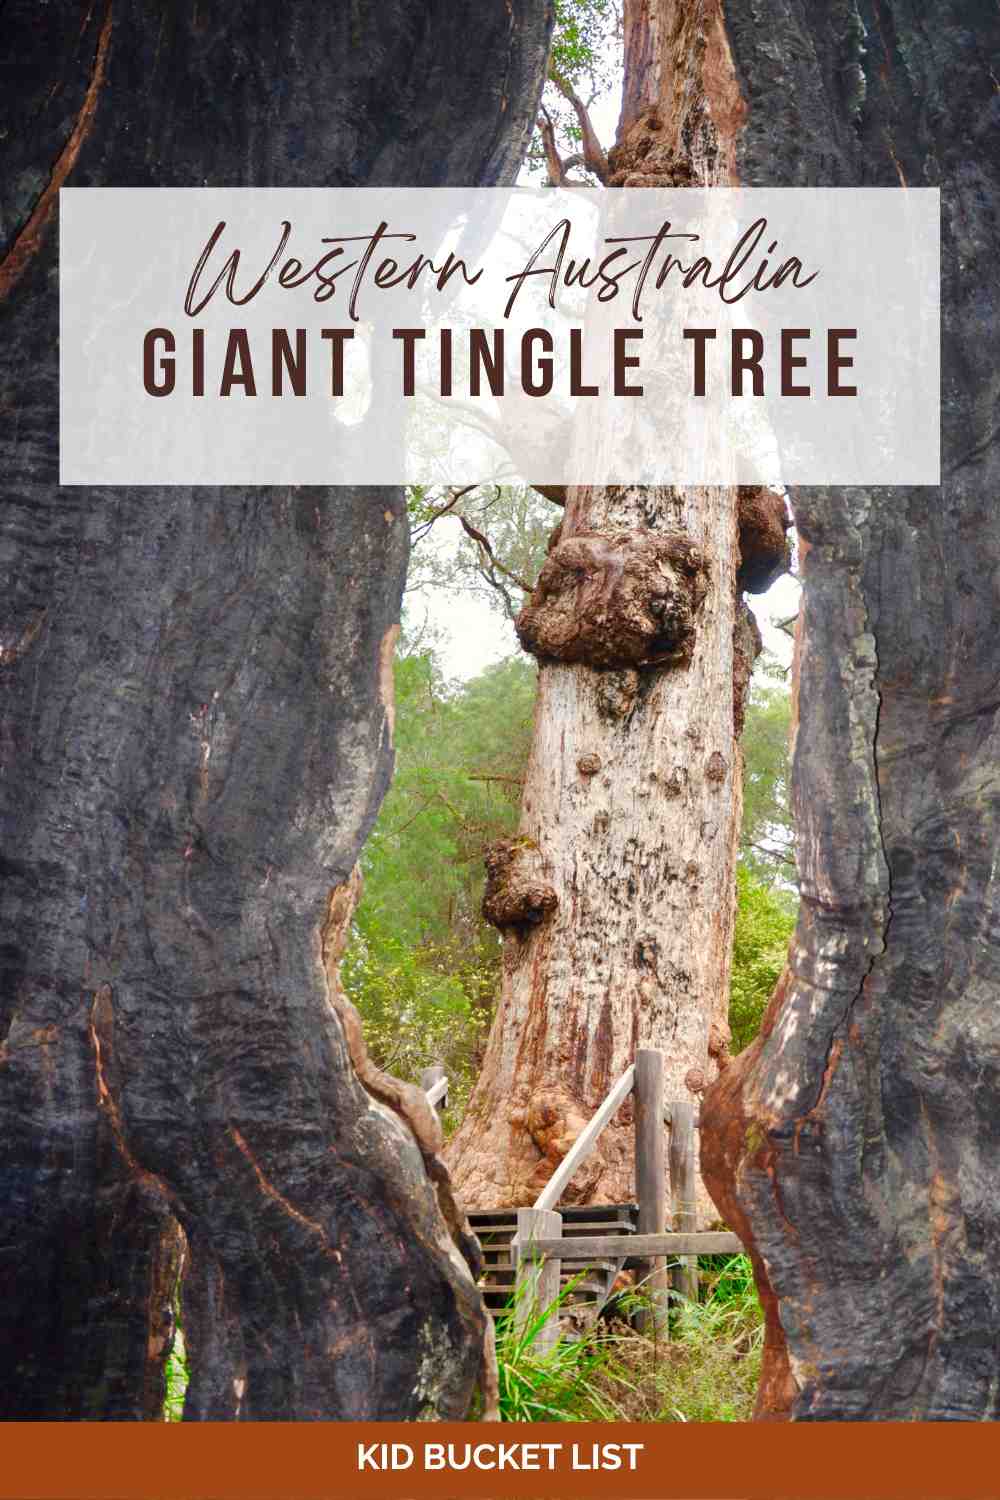 Giant Tingle Tree WA Pinterest